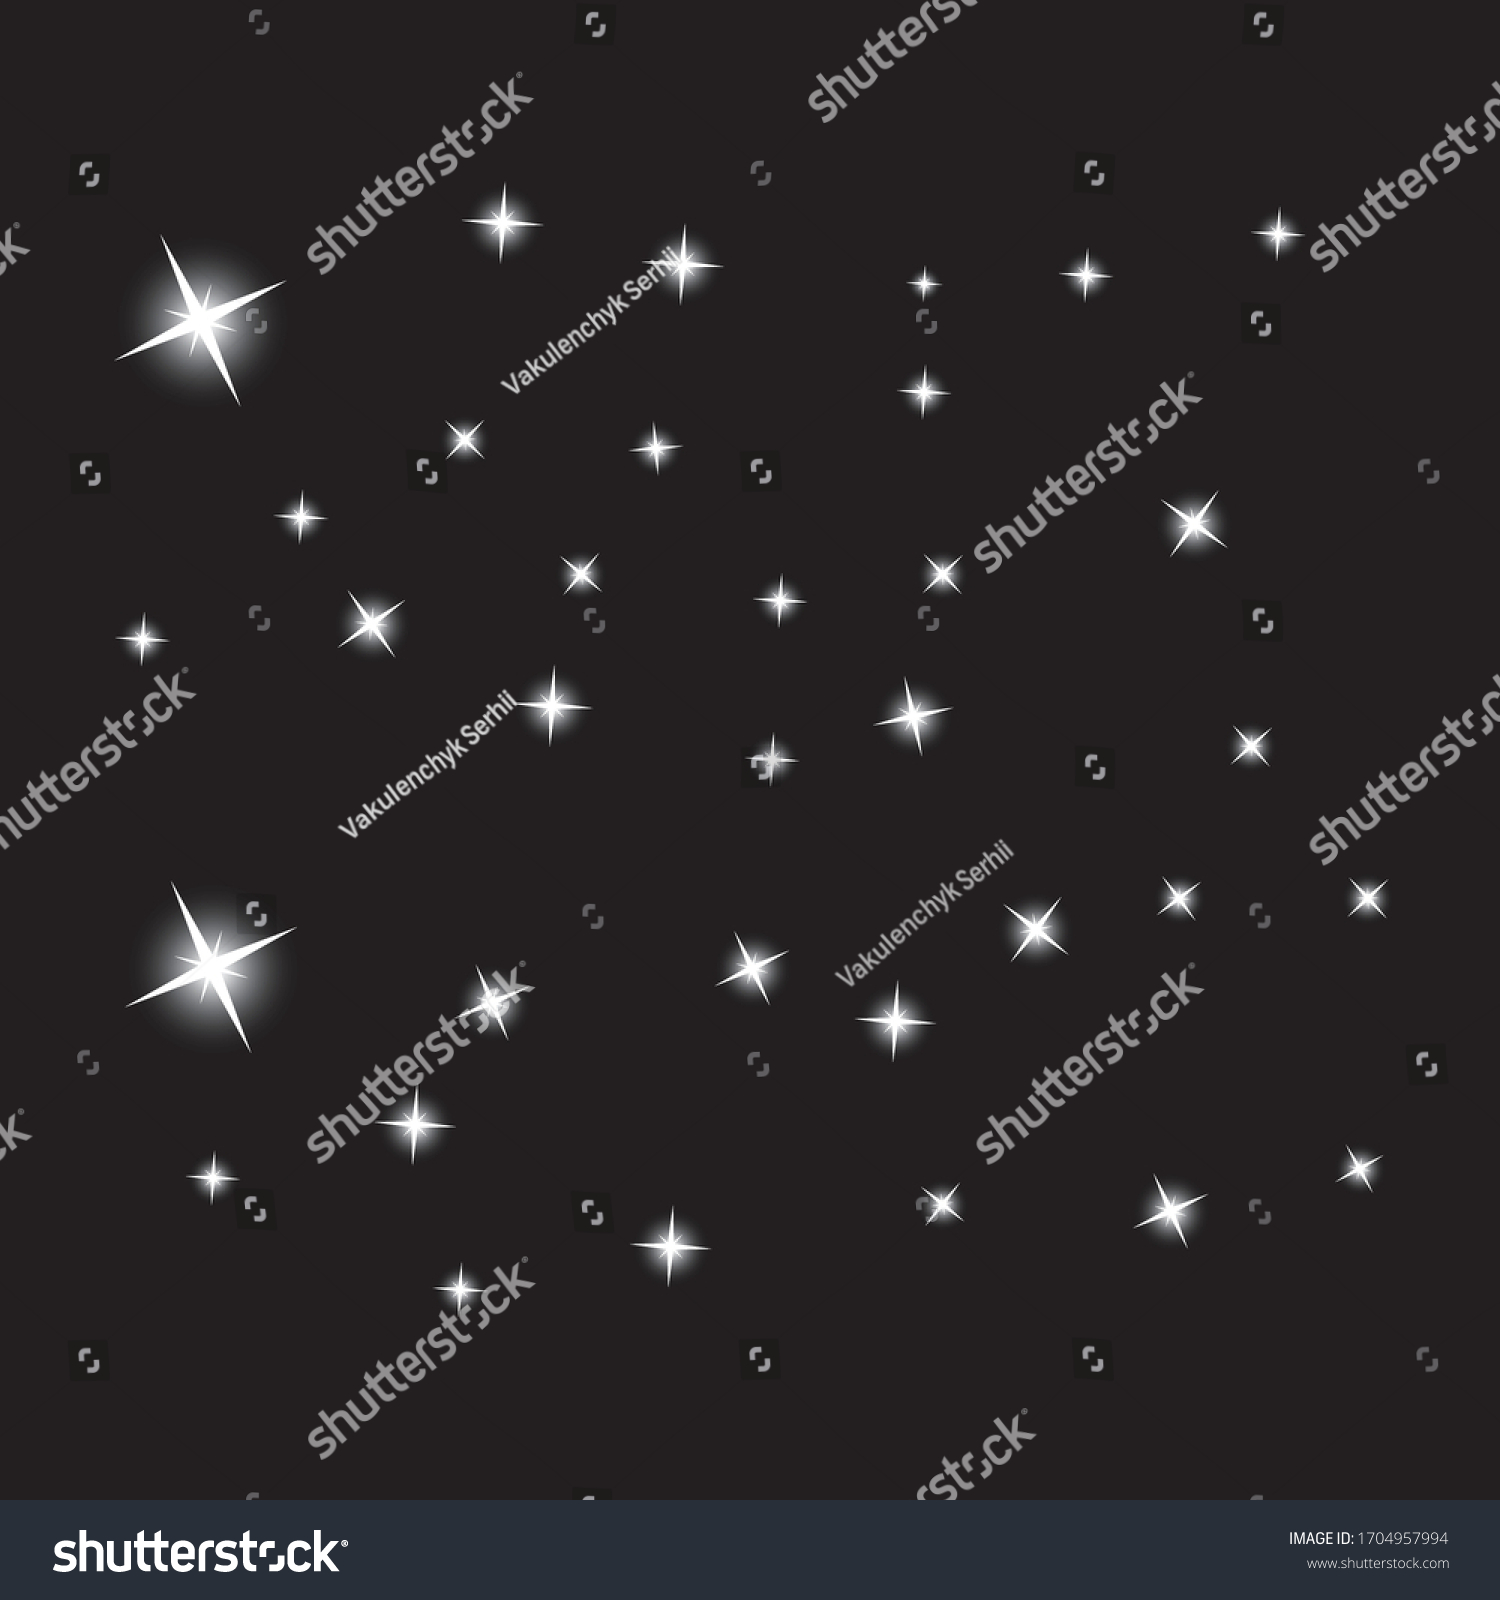 SVG of Starry night sky, vector illustration
 svg